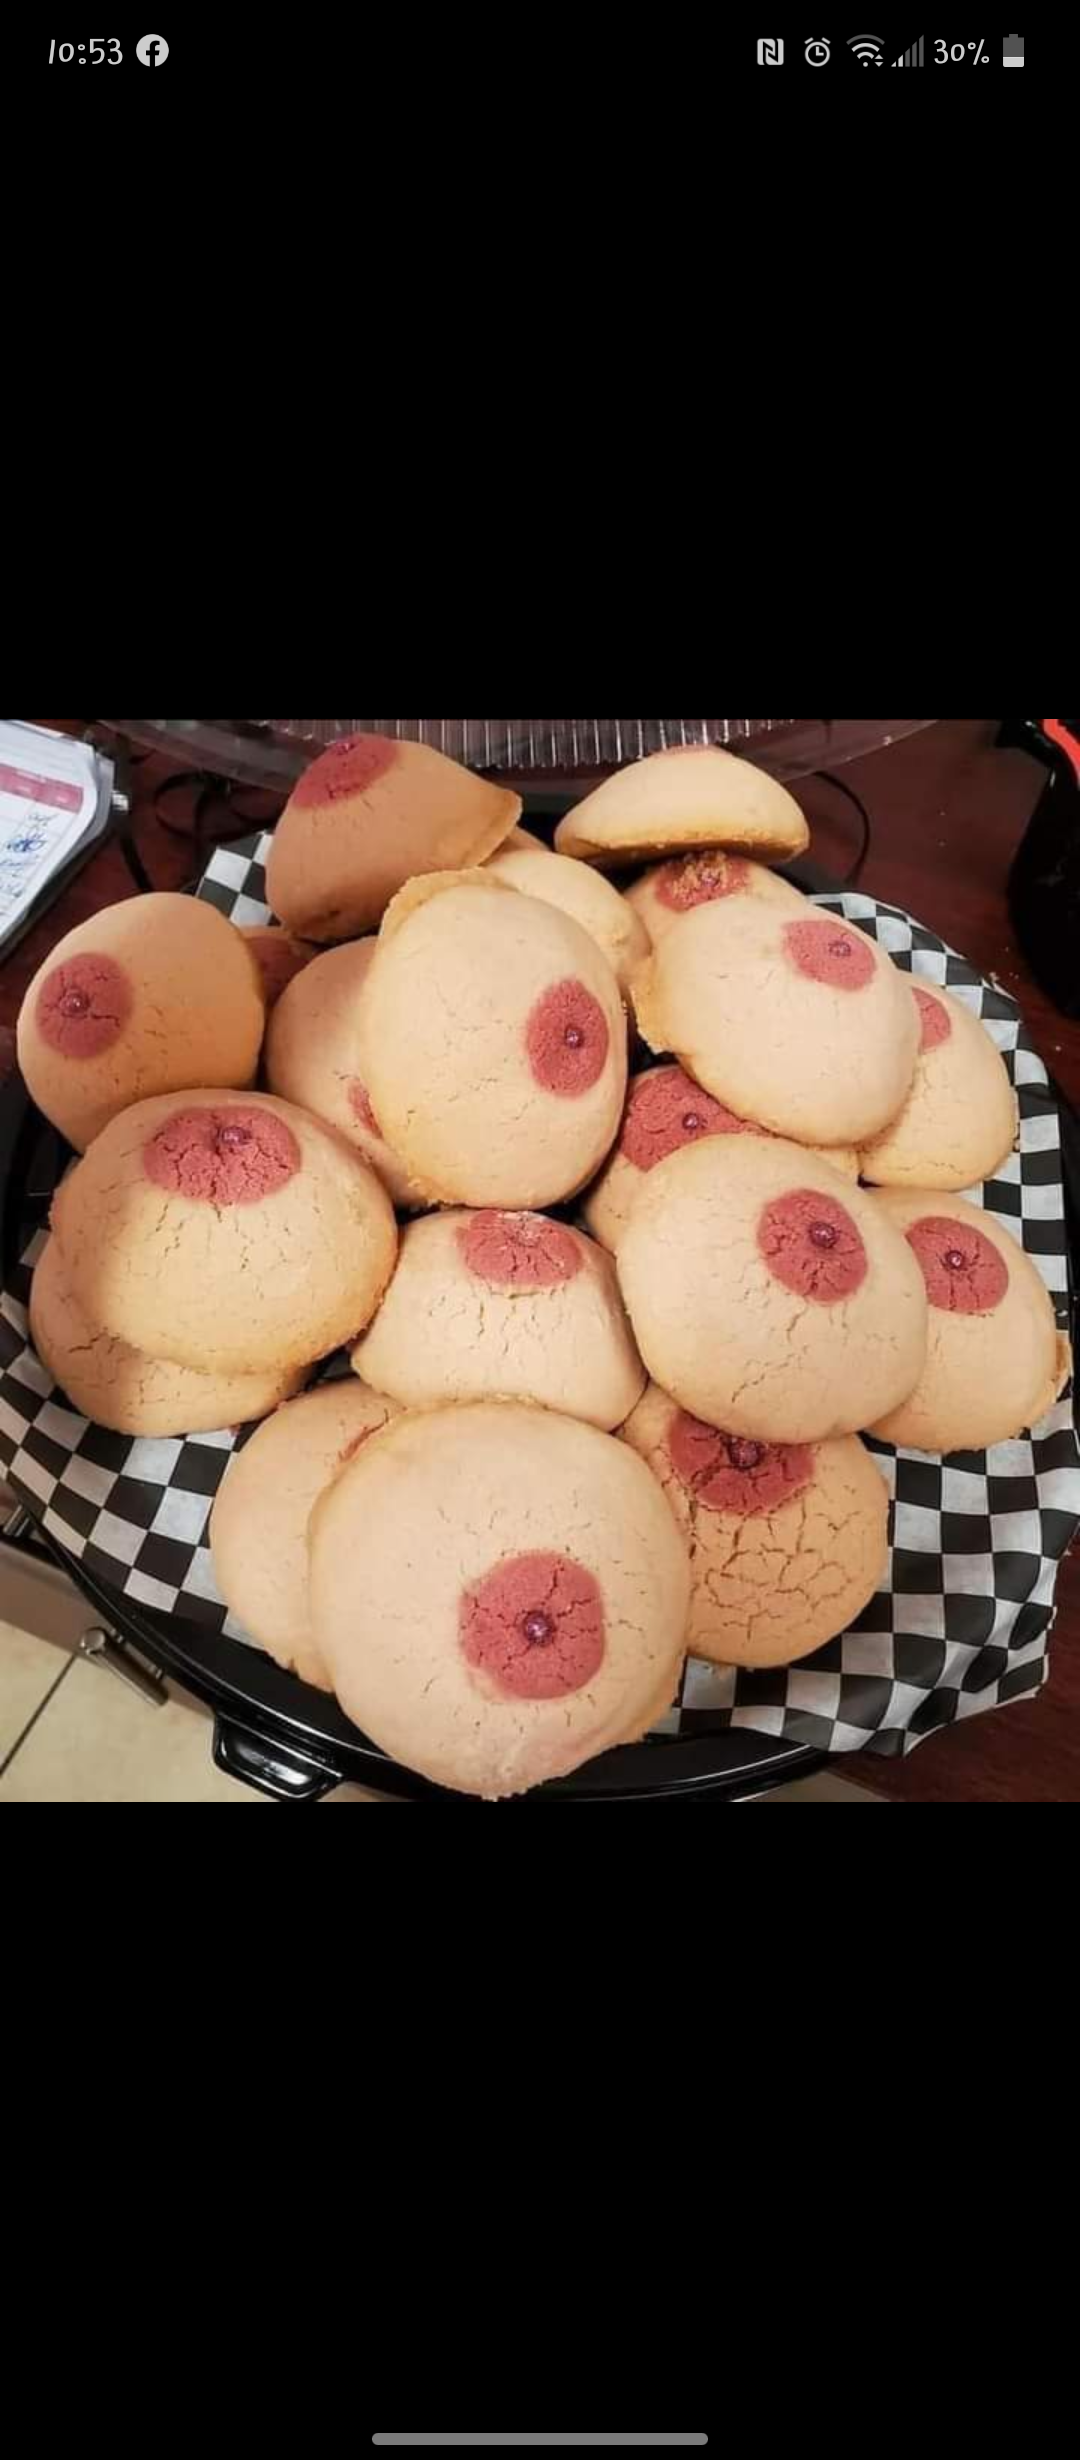 My friend tried to make eyeball cookies...